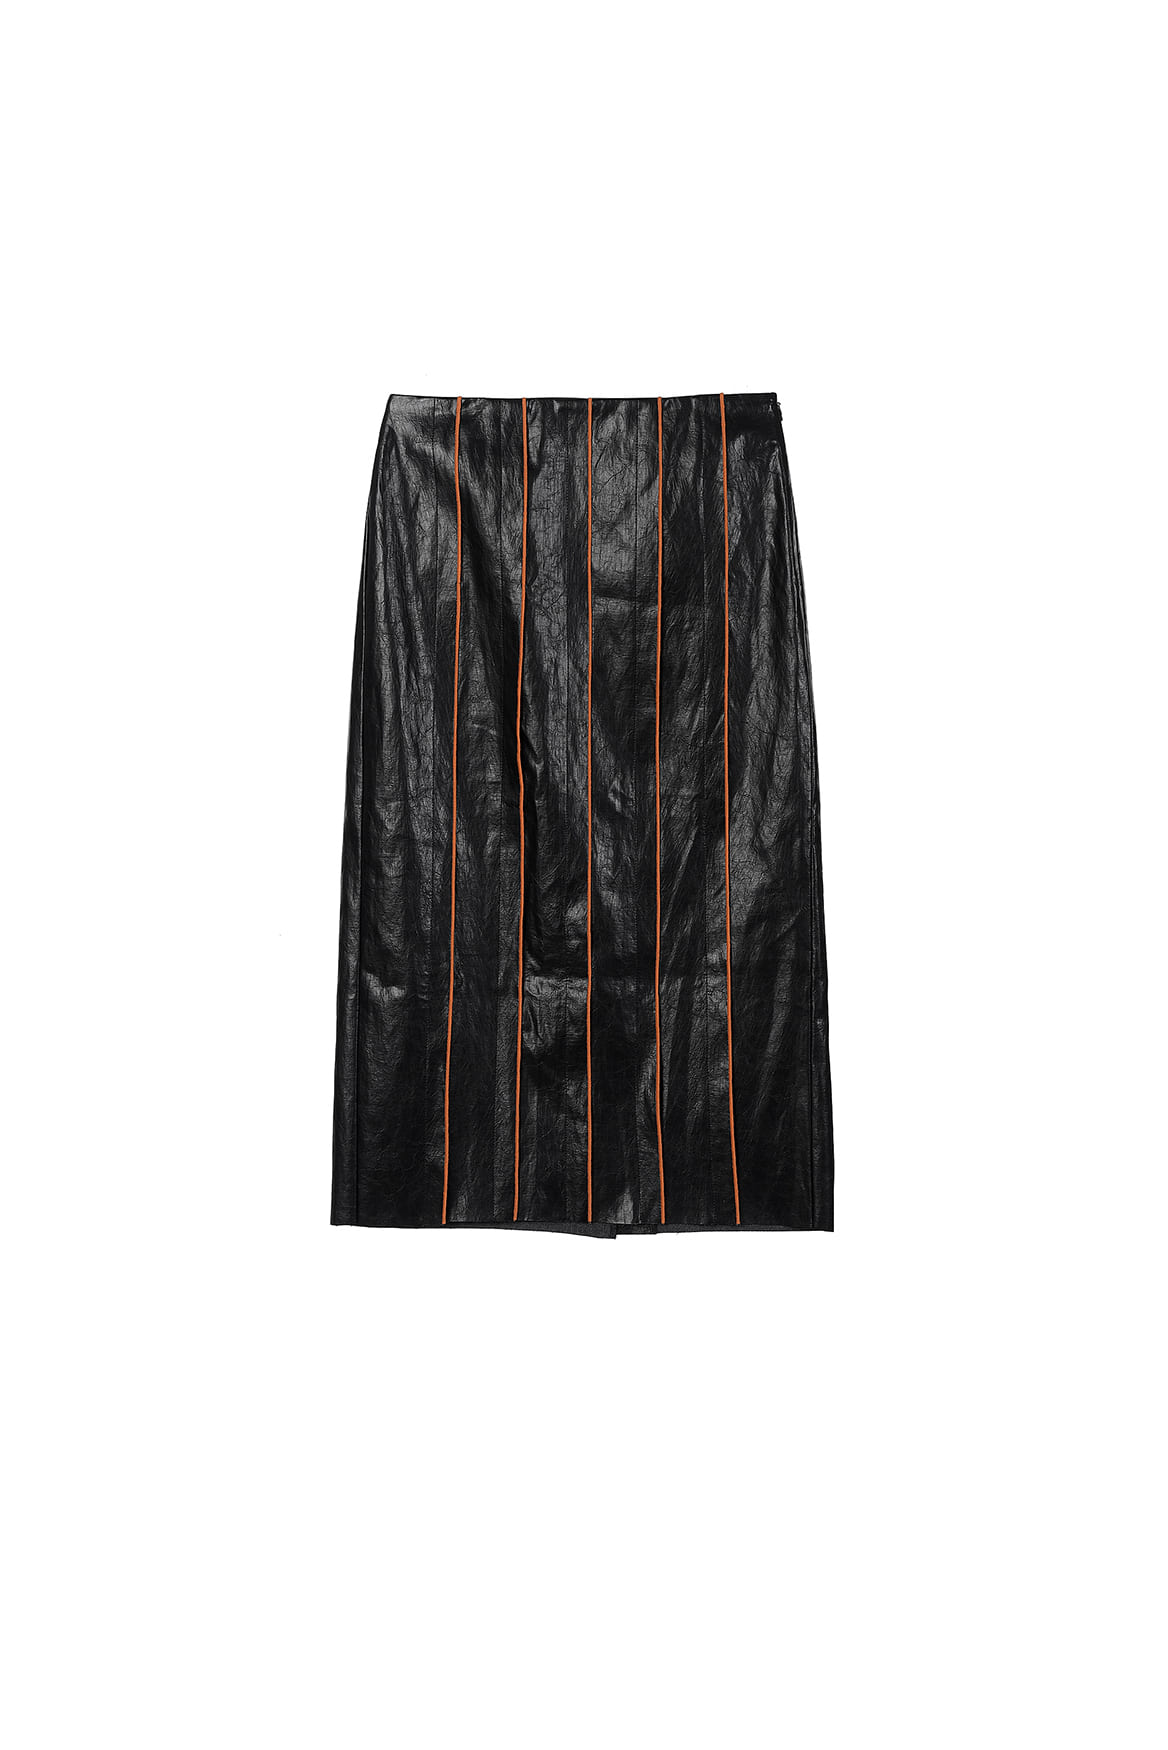 Colour Edges Eco Leather Skirt_Black+Autumnal Brown